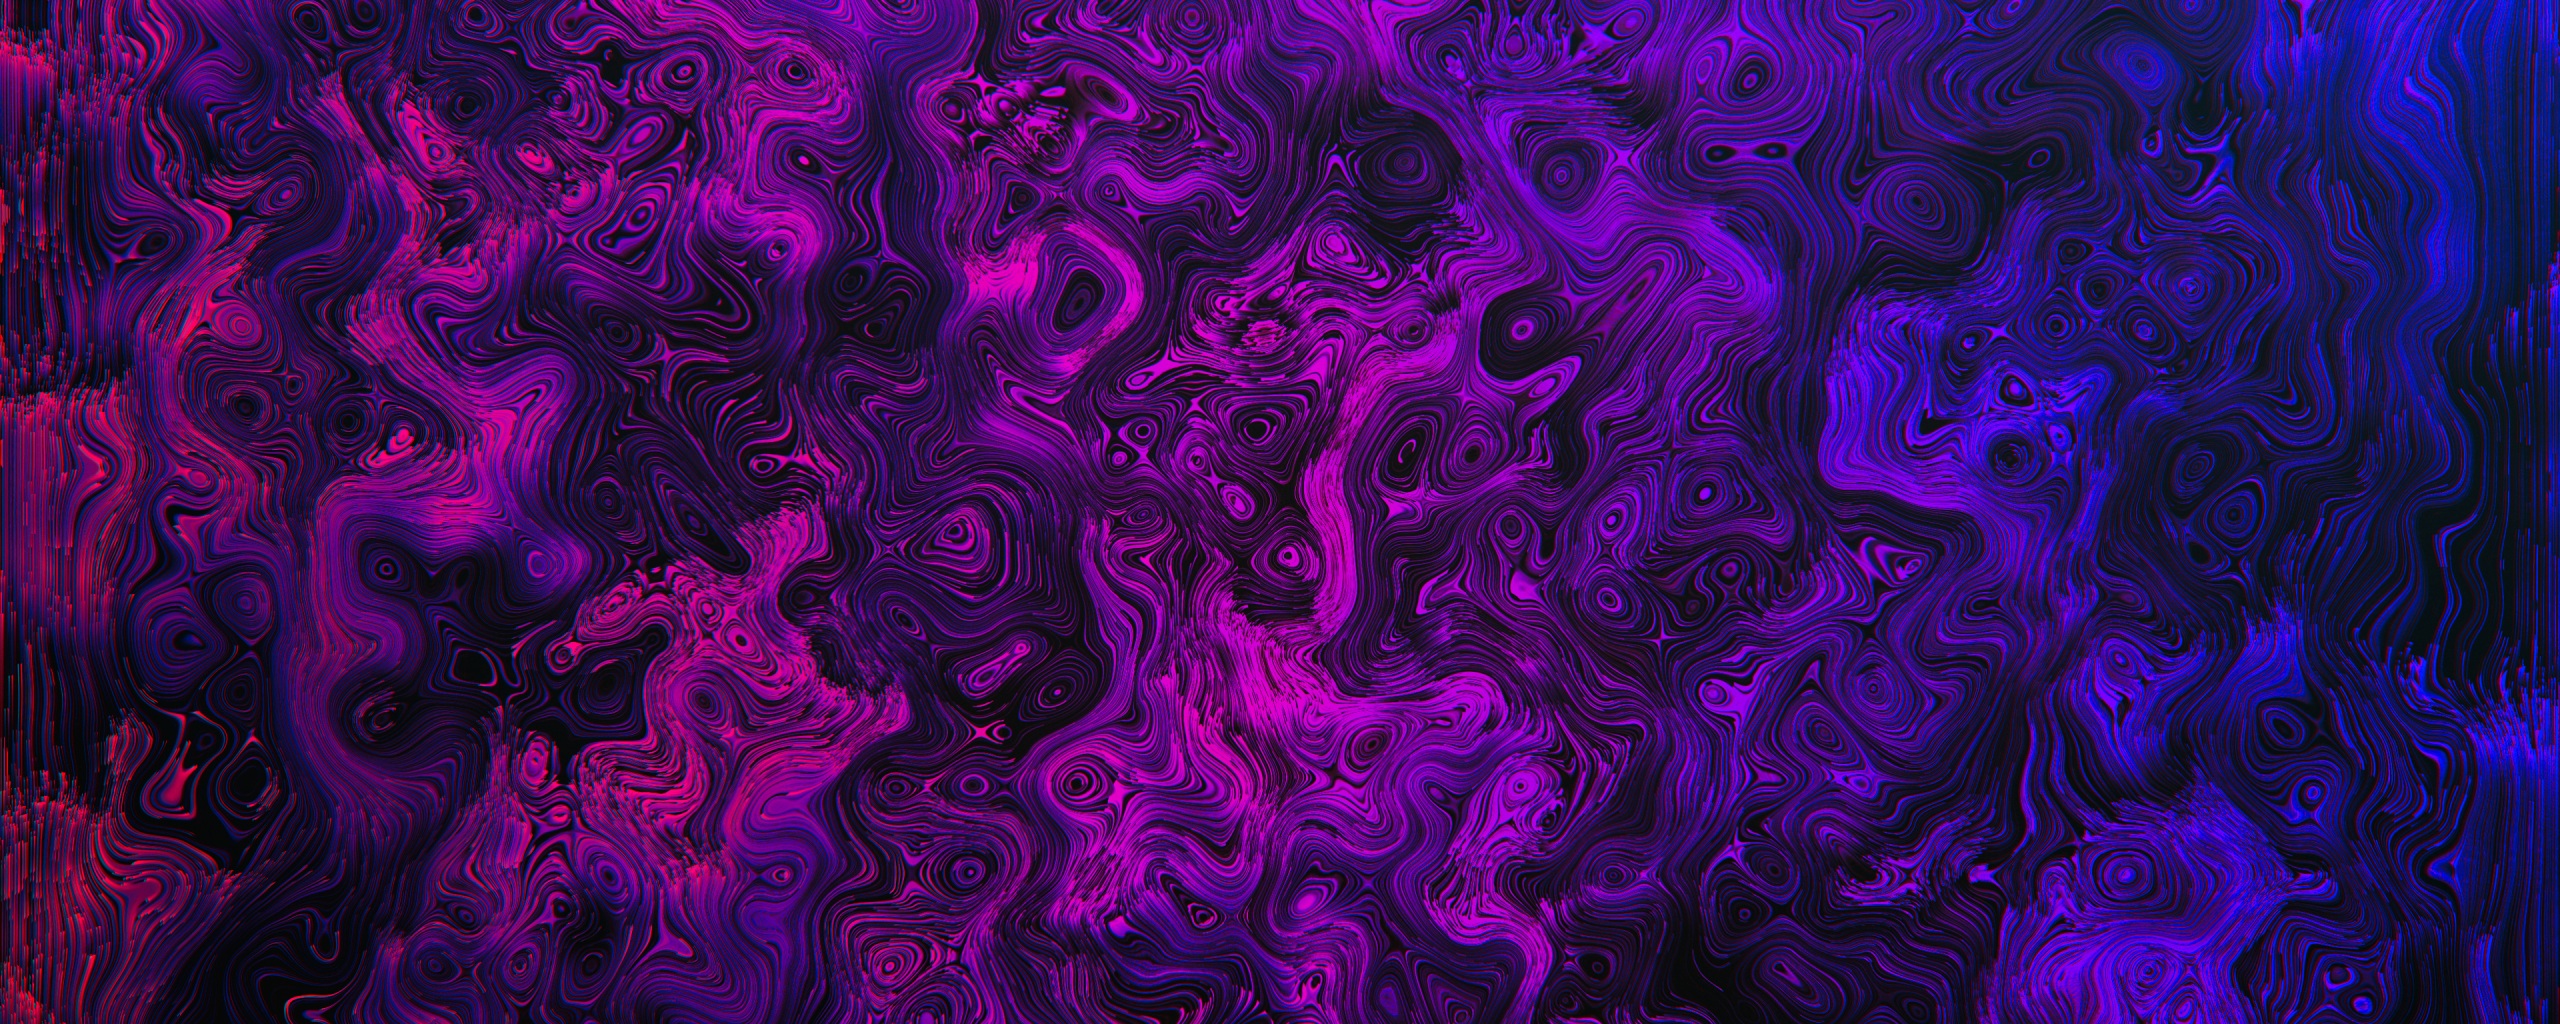 Wallpaper 4k Abstract Purple Mixed 4k Wallpaper